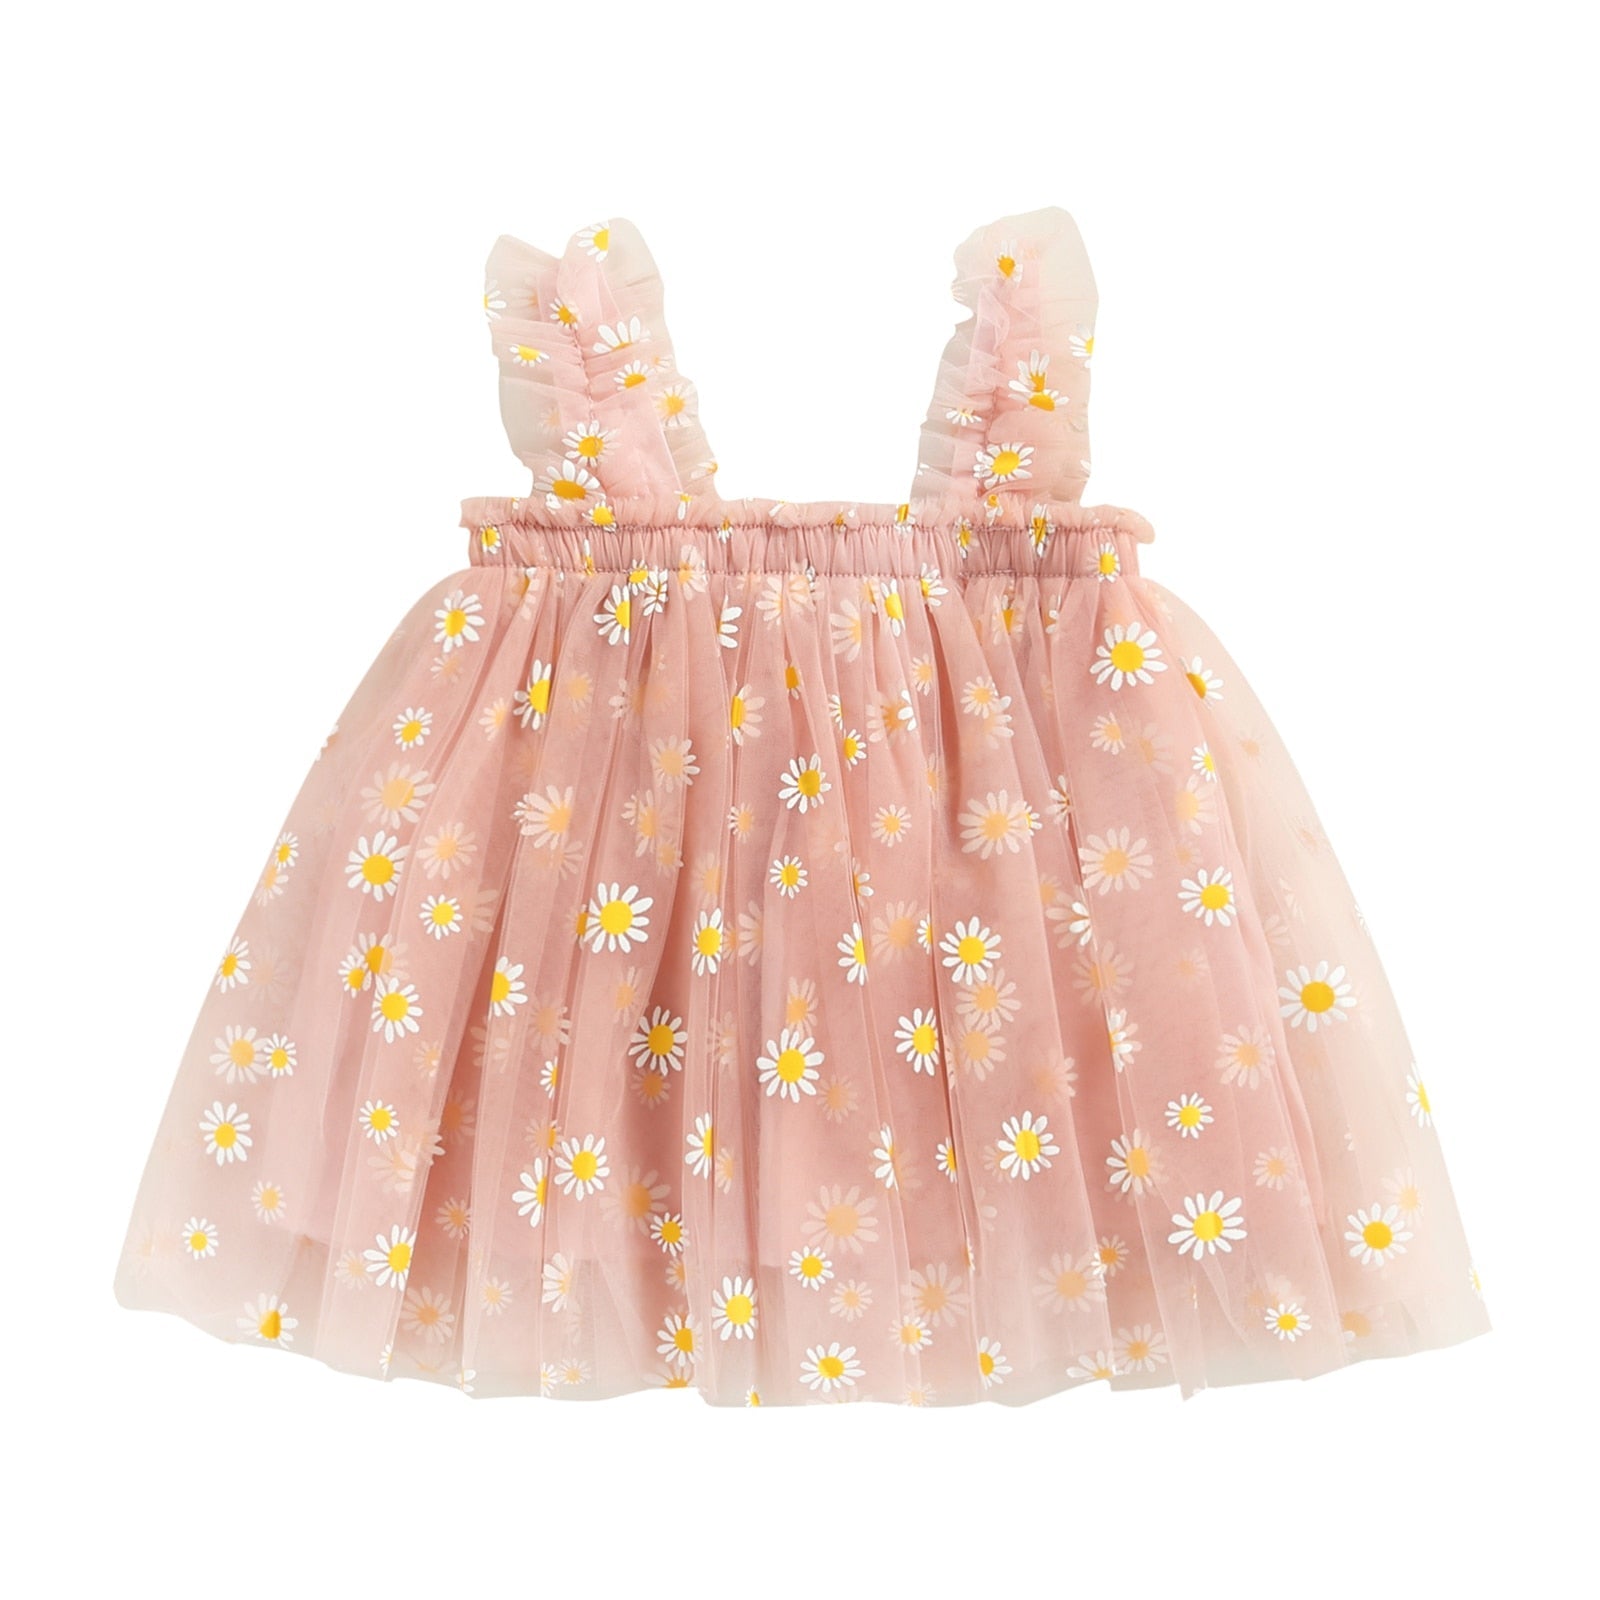 Vestido Infantil Tule Estampas vestido Loja Click Certo Margarida Rosa 2-3 anos 48cm 